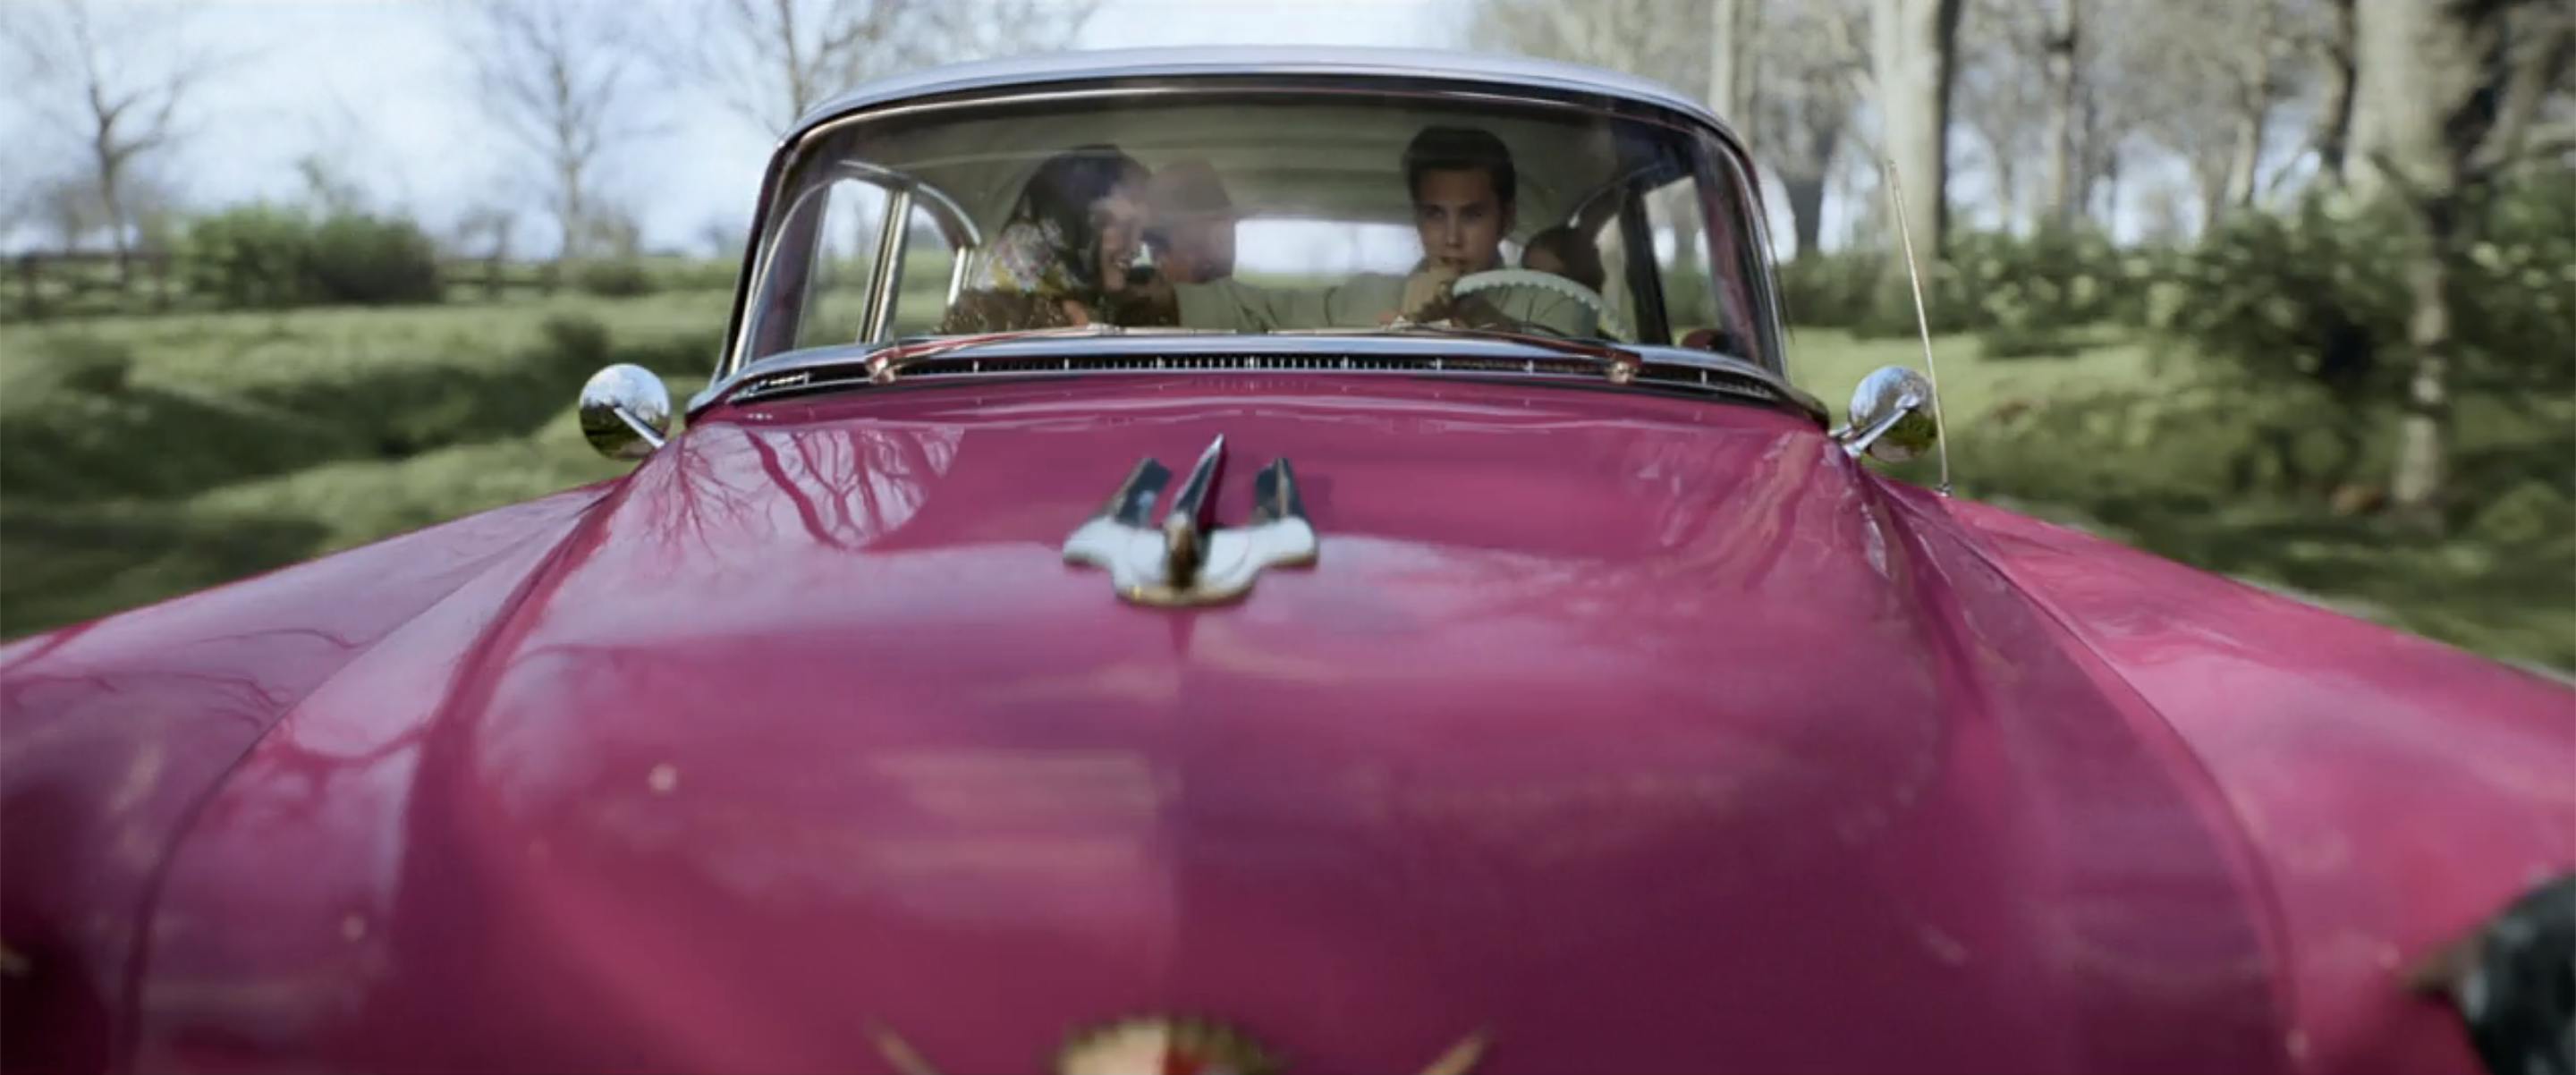 Elvis Movie Cars pink cadillac